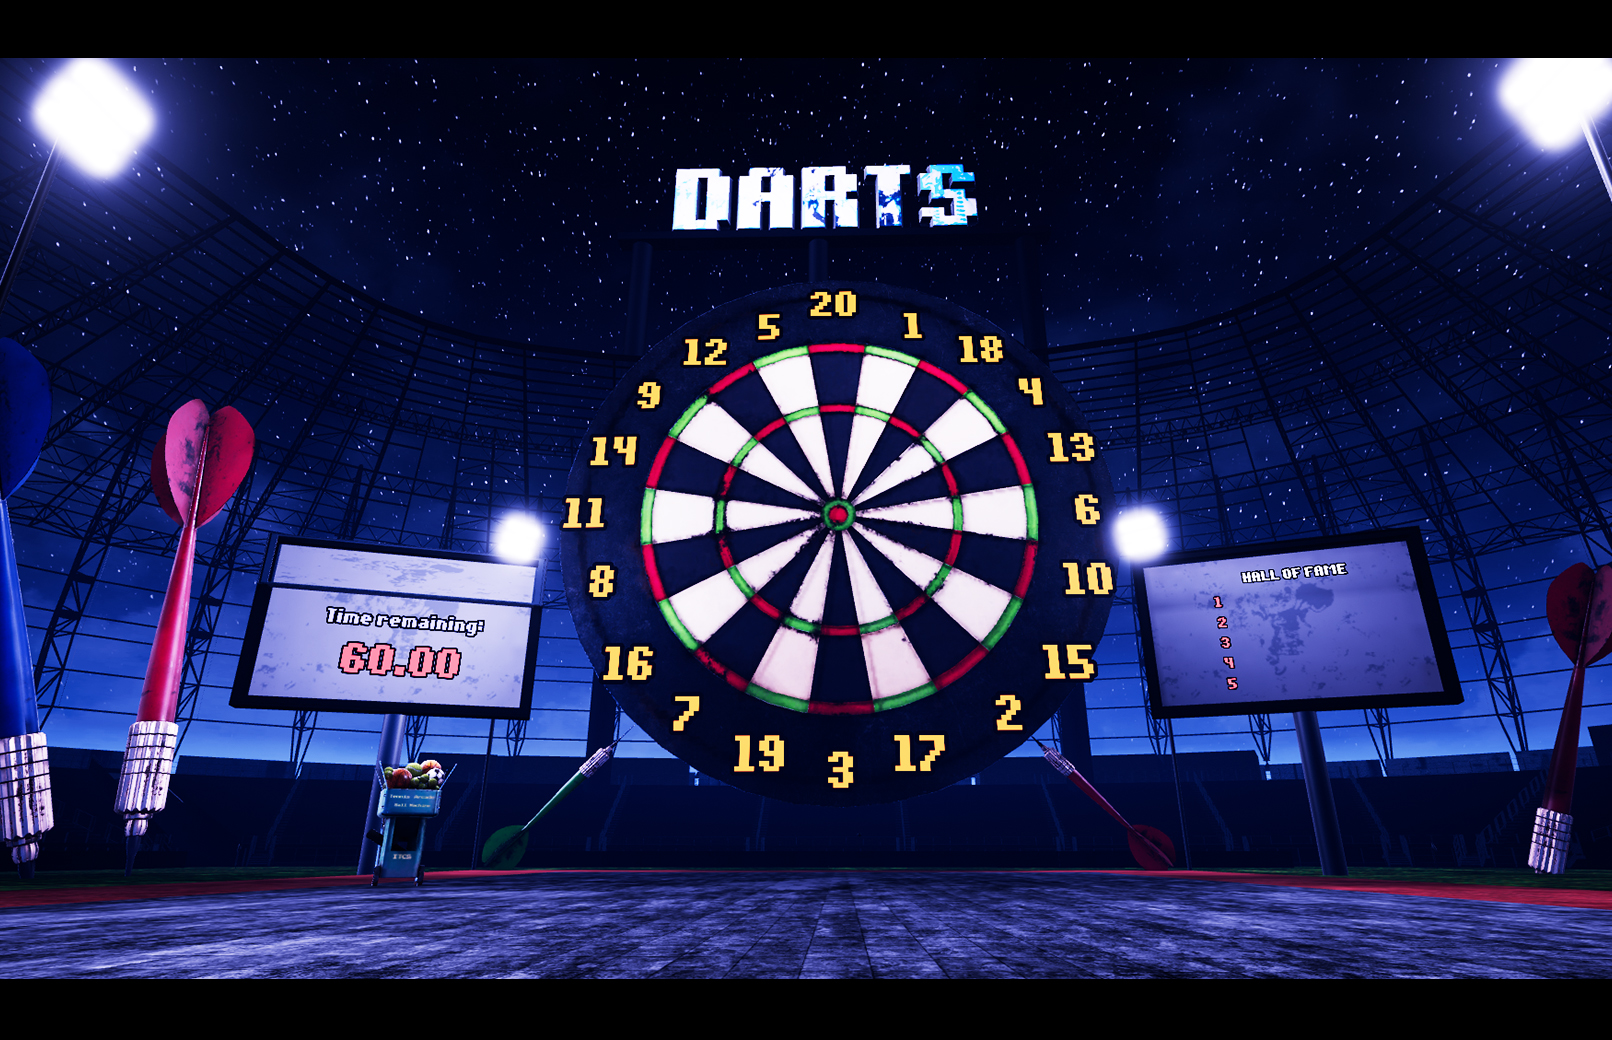 Tennis Arcade VR screenshot